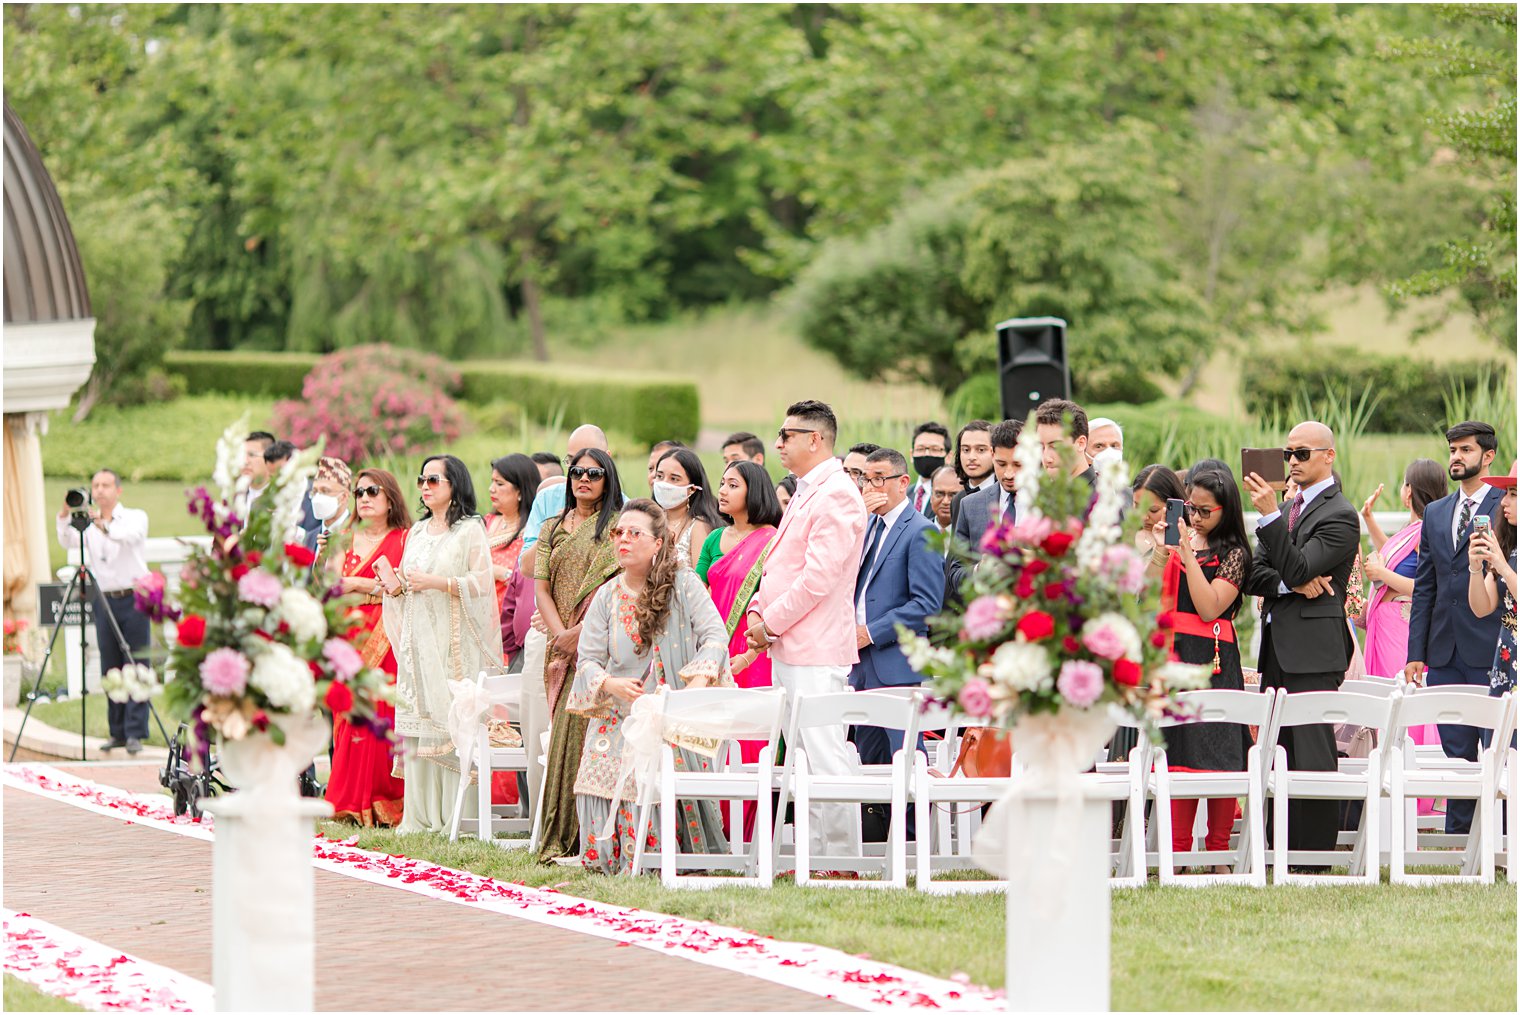 guests watch bride enter Indian wedding at the Ashford Estate